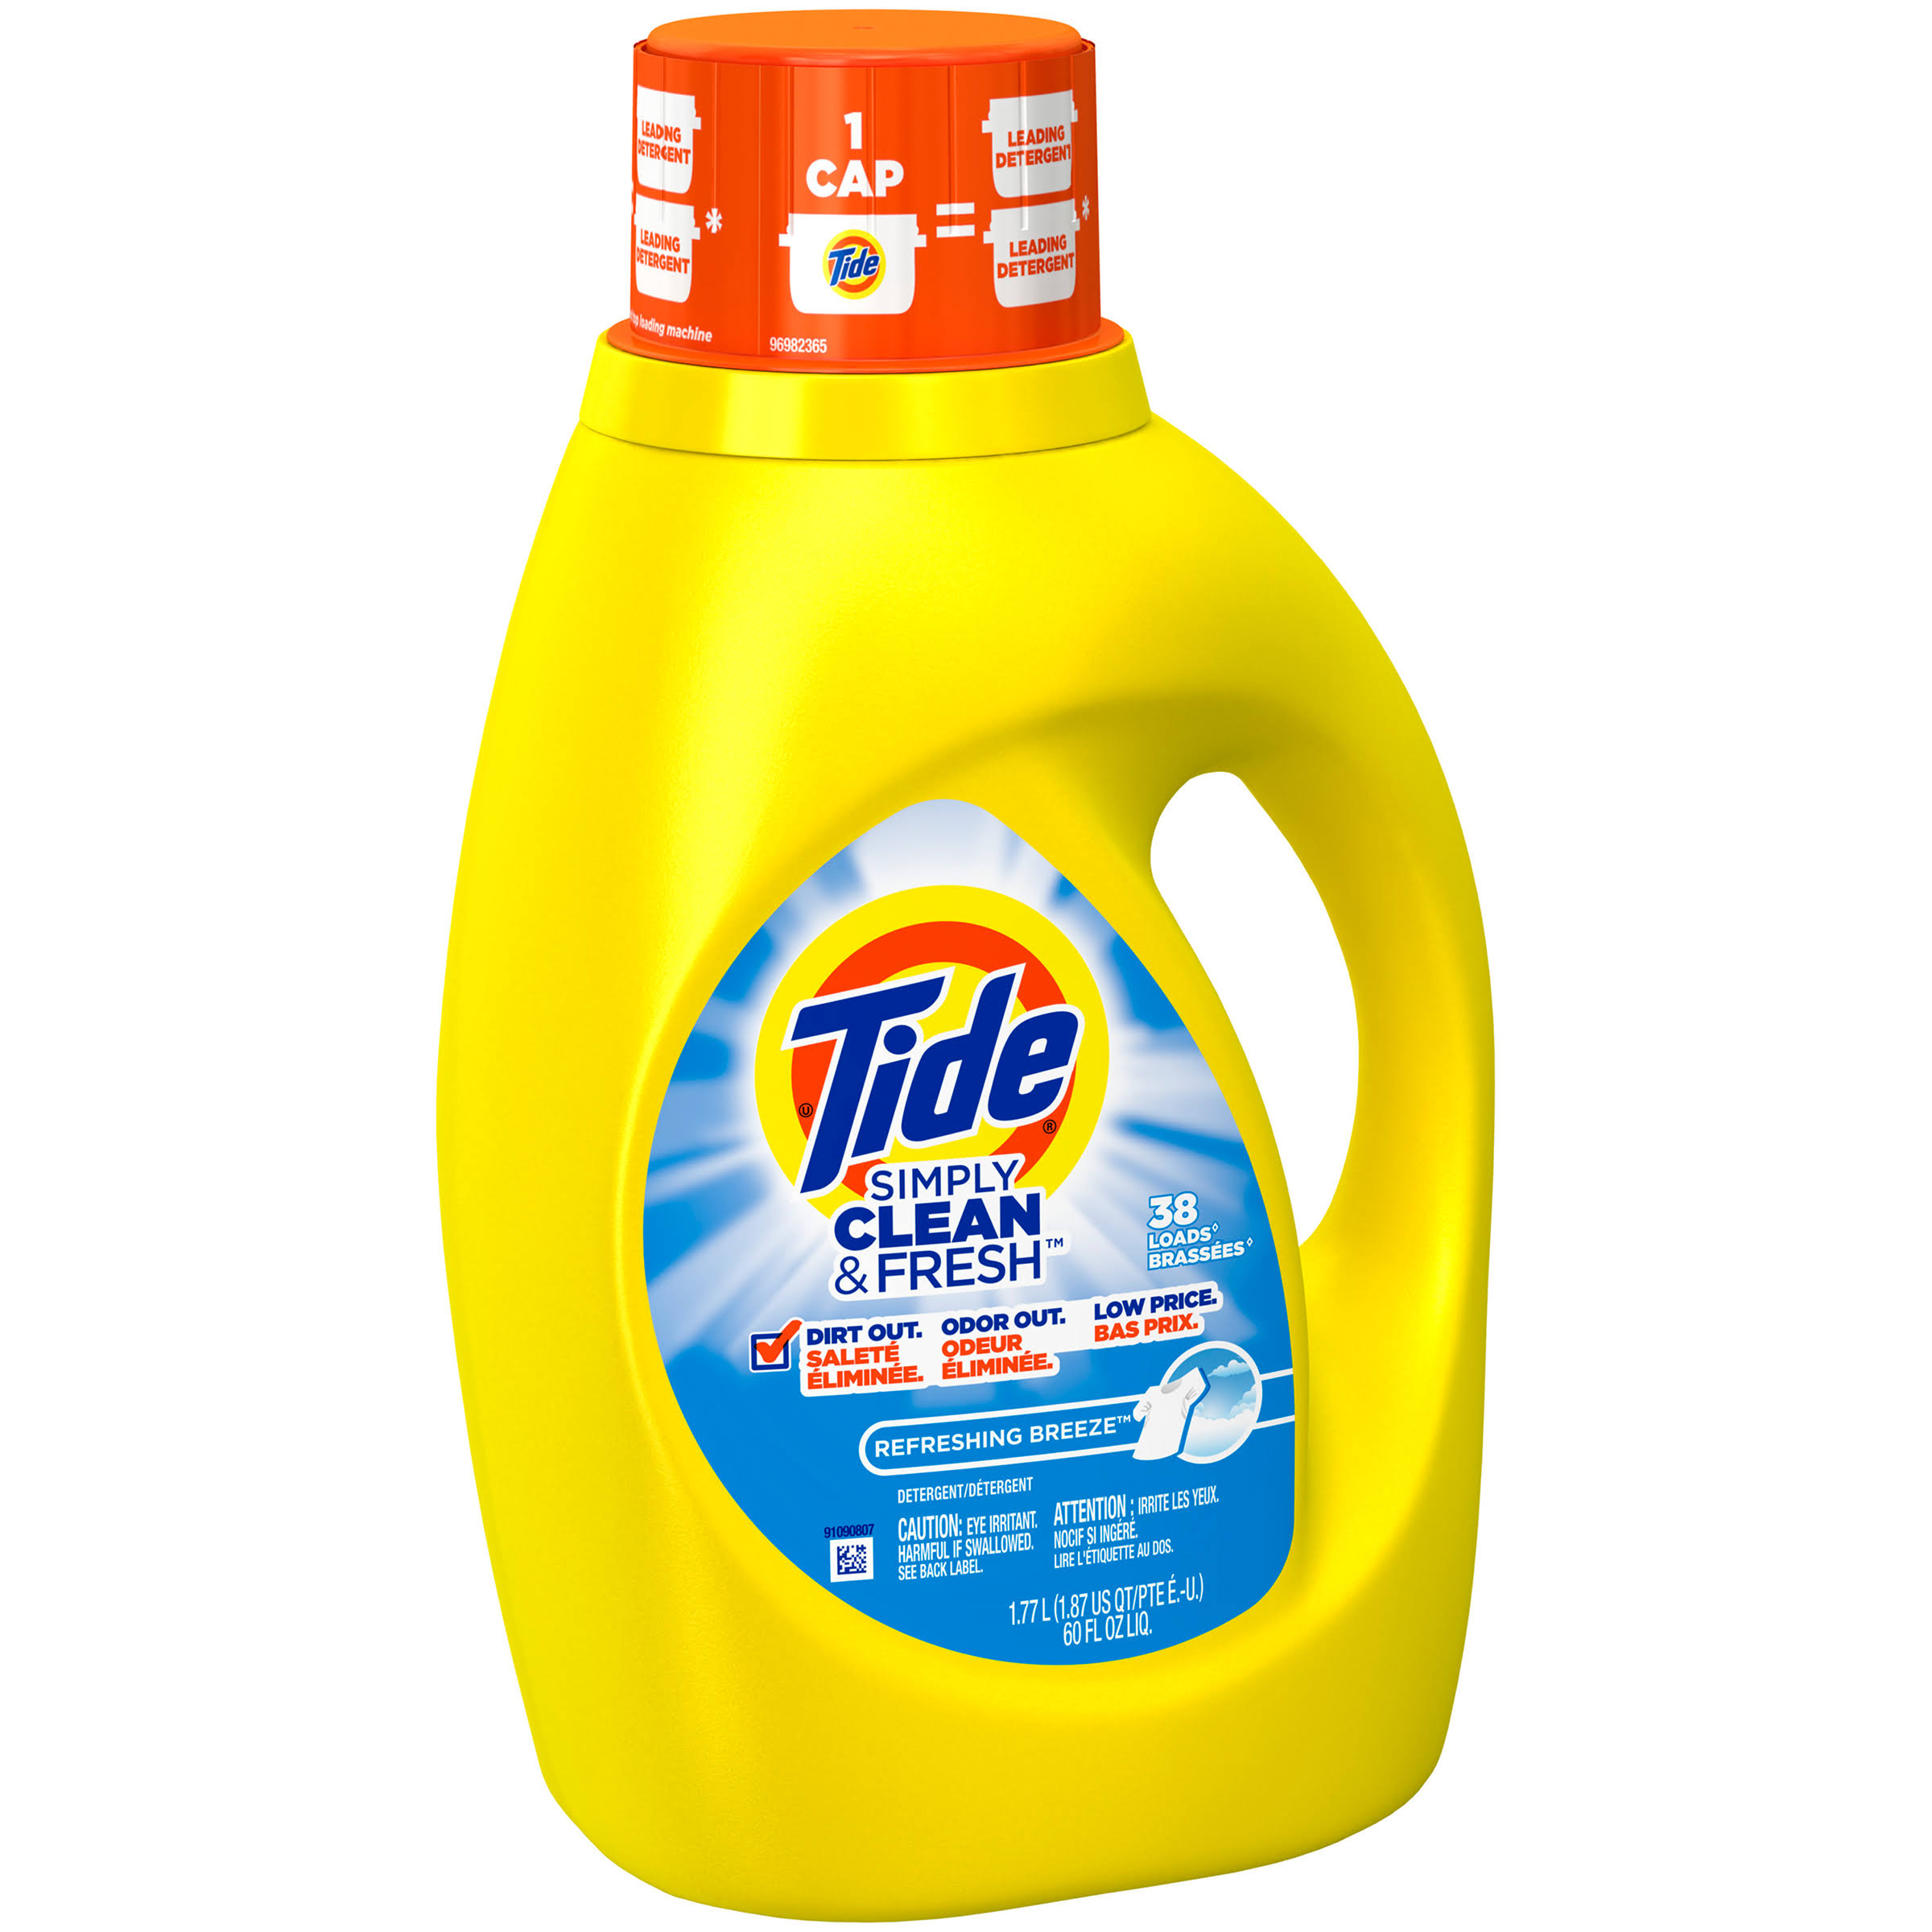 Tide Simply Clean & Fresh Liquid Laundry Detergent - Refreshing Breeze, 60oz